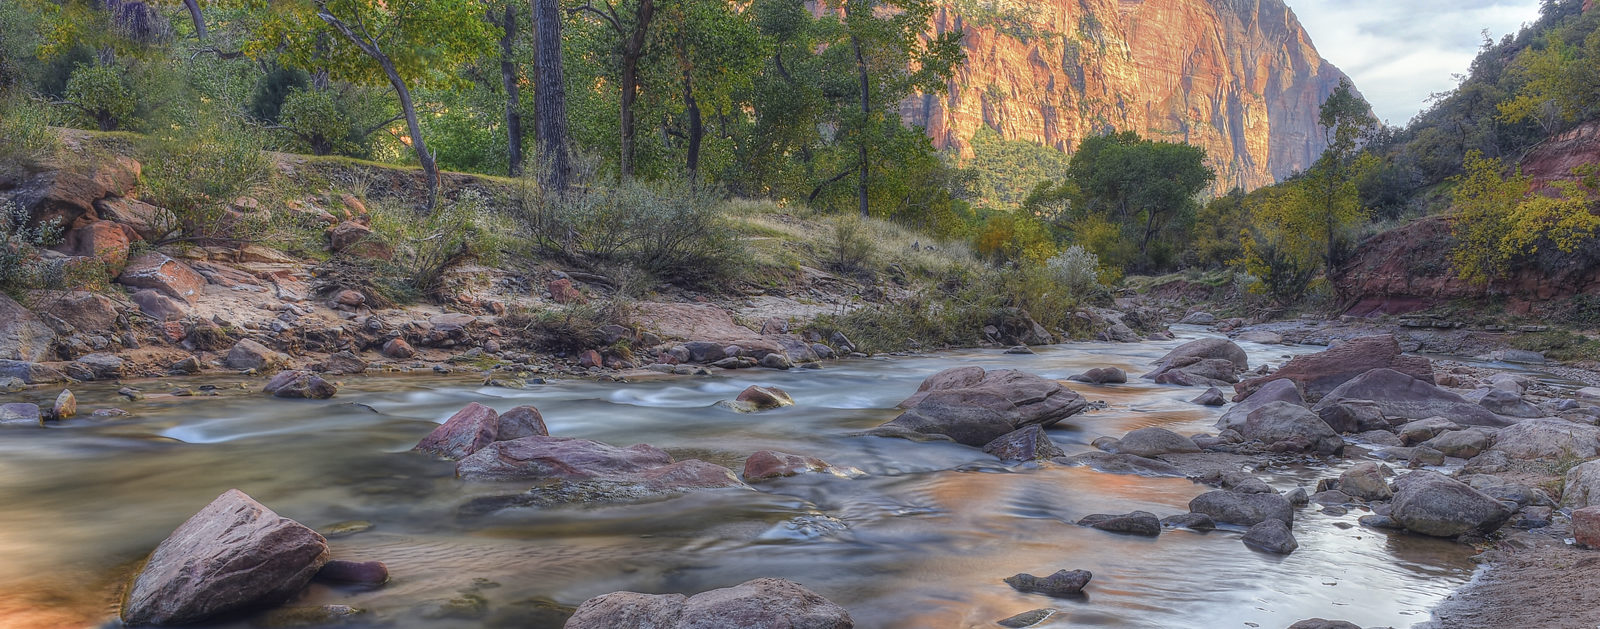 The Virgin River in Zion National Park, Utah. | Photo: Diana Robinson, flickrCC